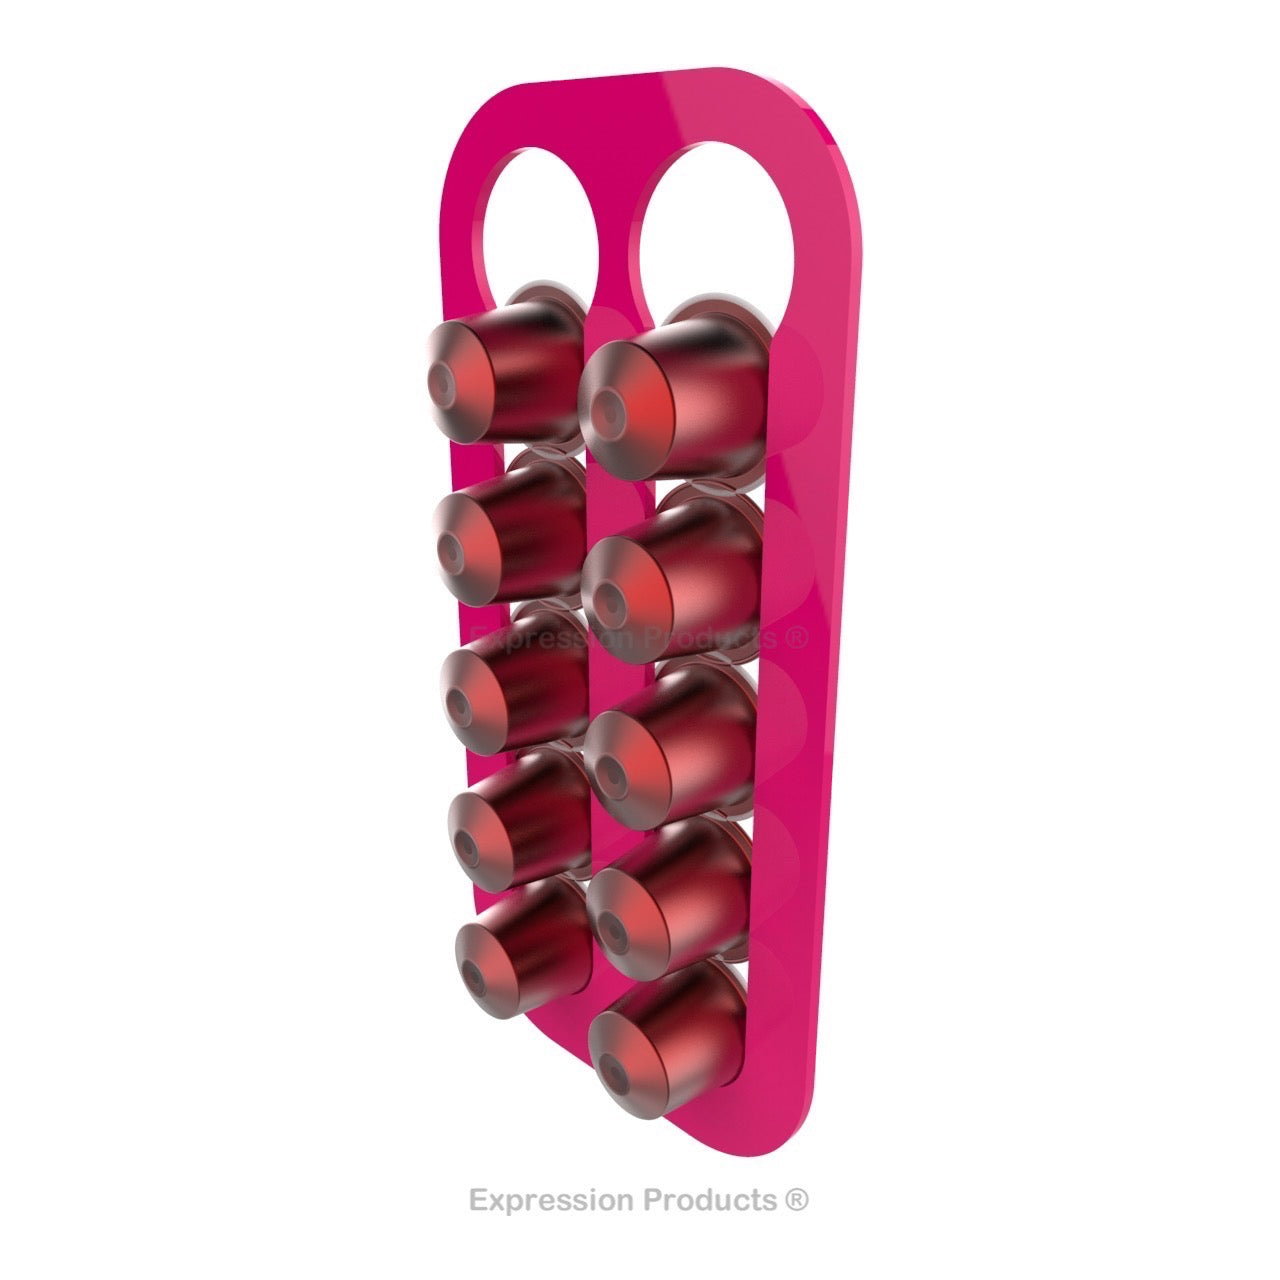 Magnetic Nespresso Original Line coffee pod holder shown in pink holding 10 pods